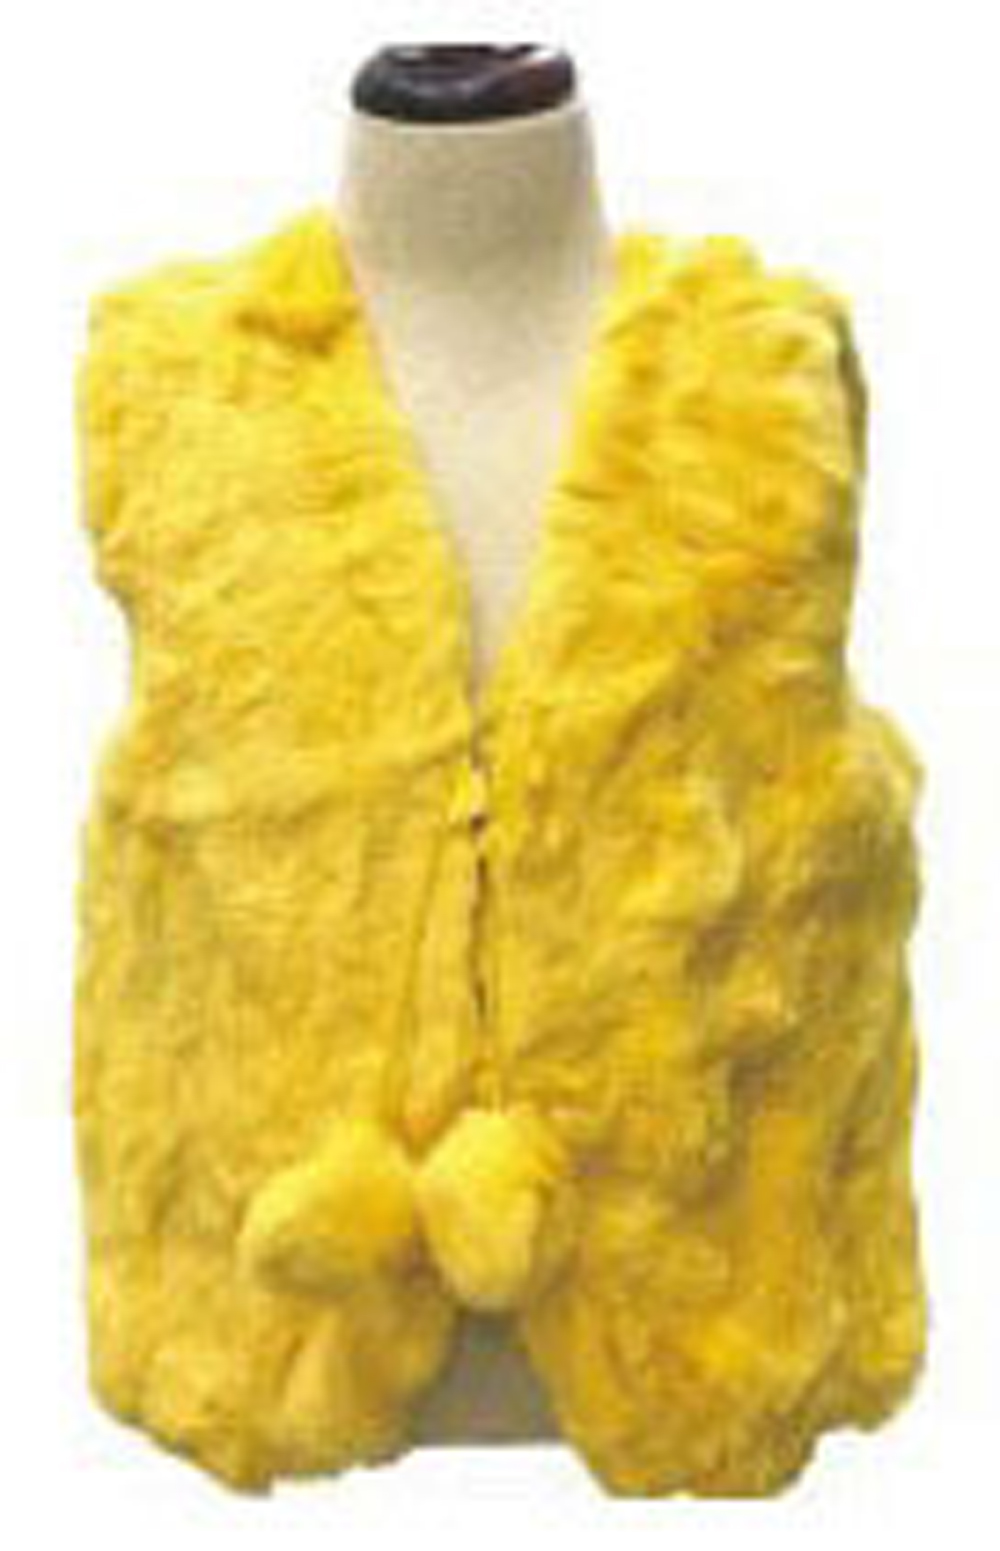 Winter Fur Kids' Yellow Genuine Rex Rabbit Vest K08V01YL.